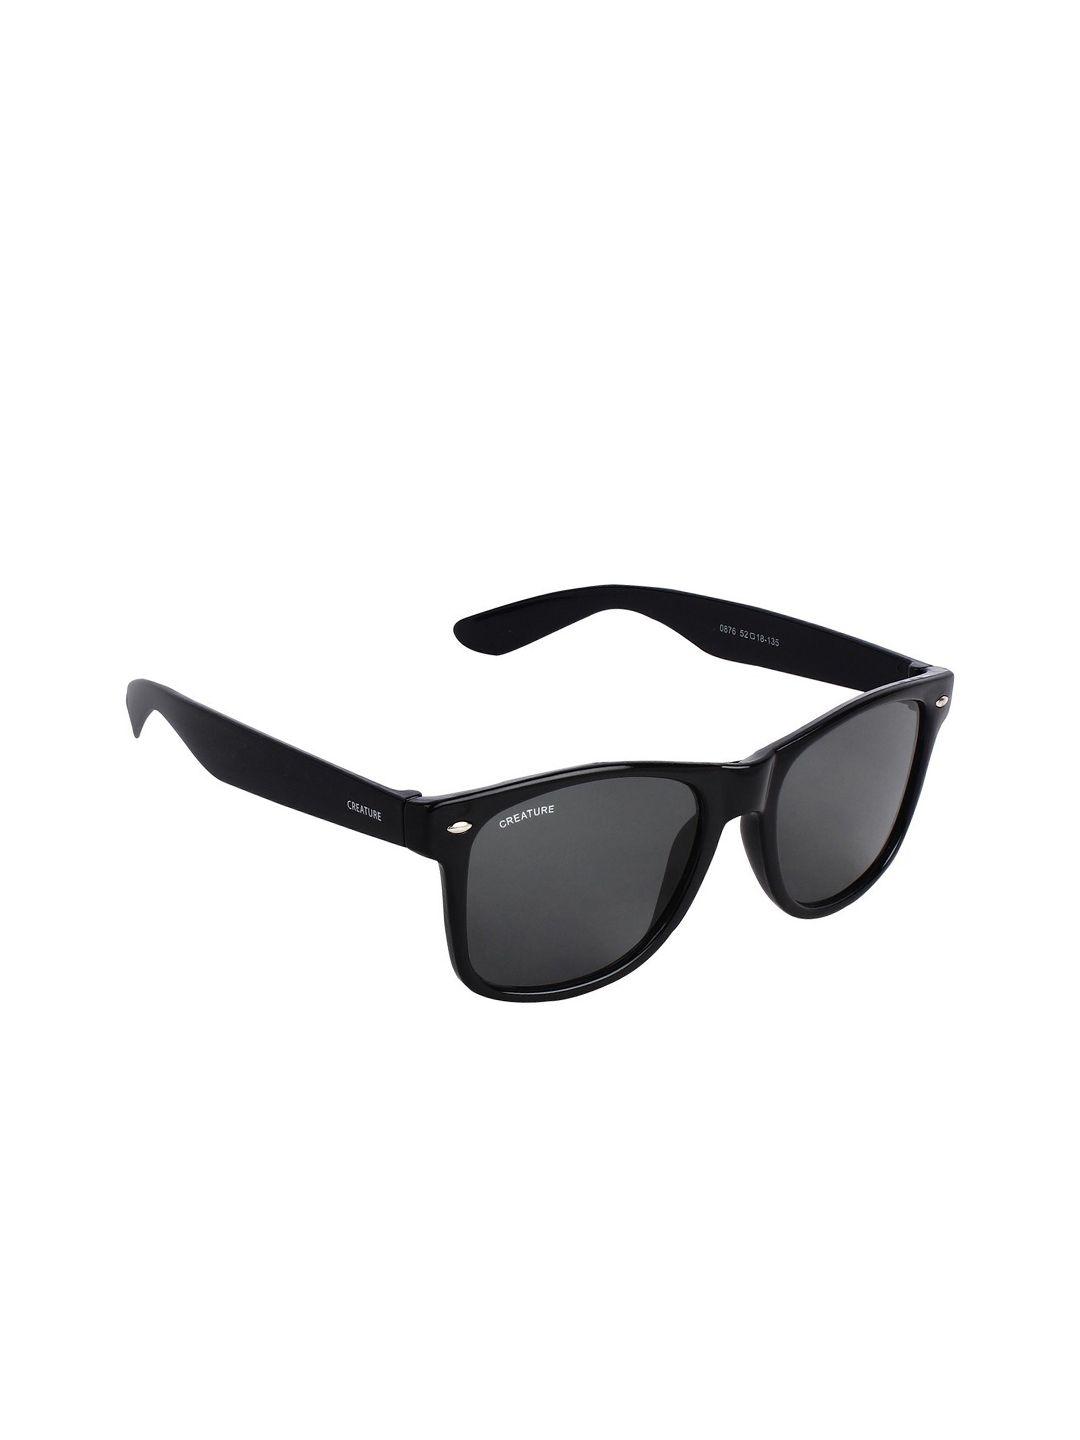 creature unisex black lens & black aviator sunglasses with uv protected lens